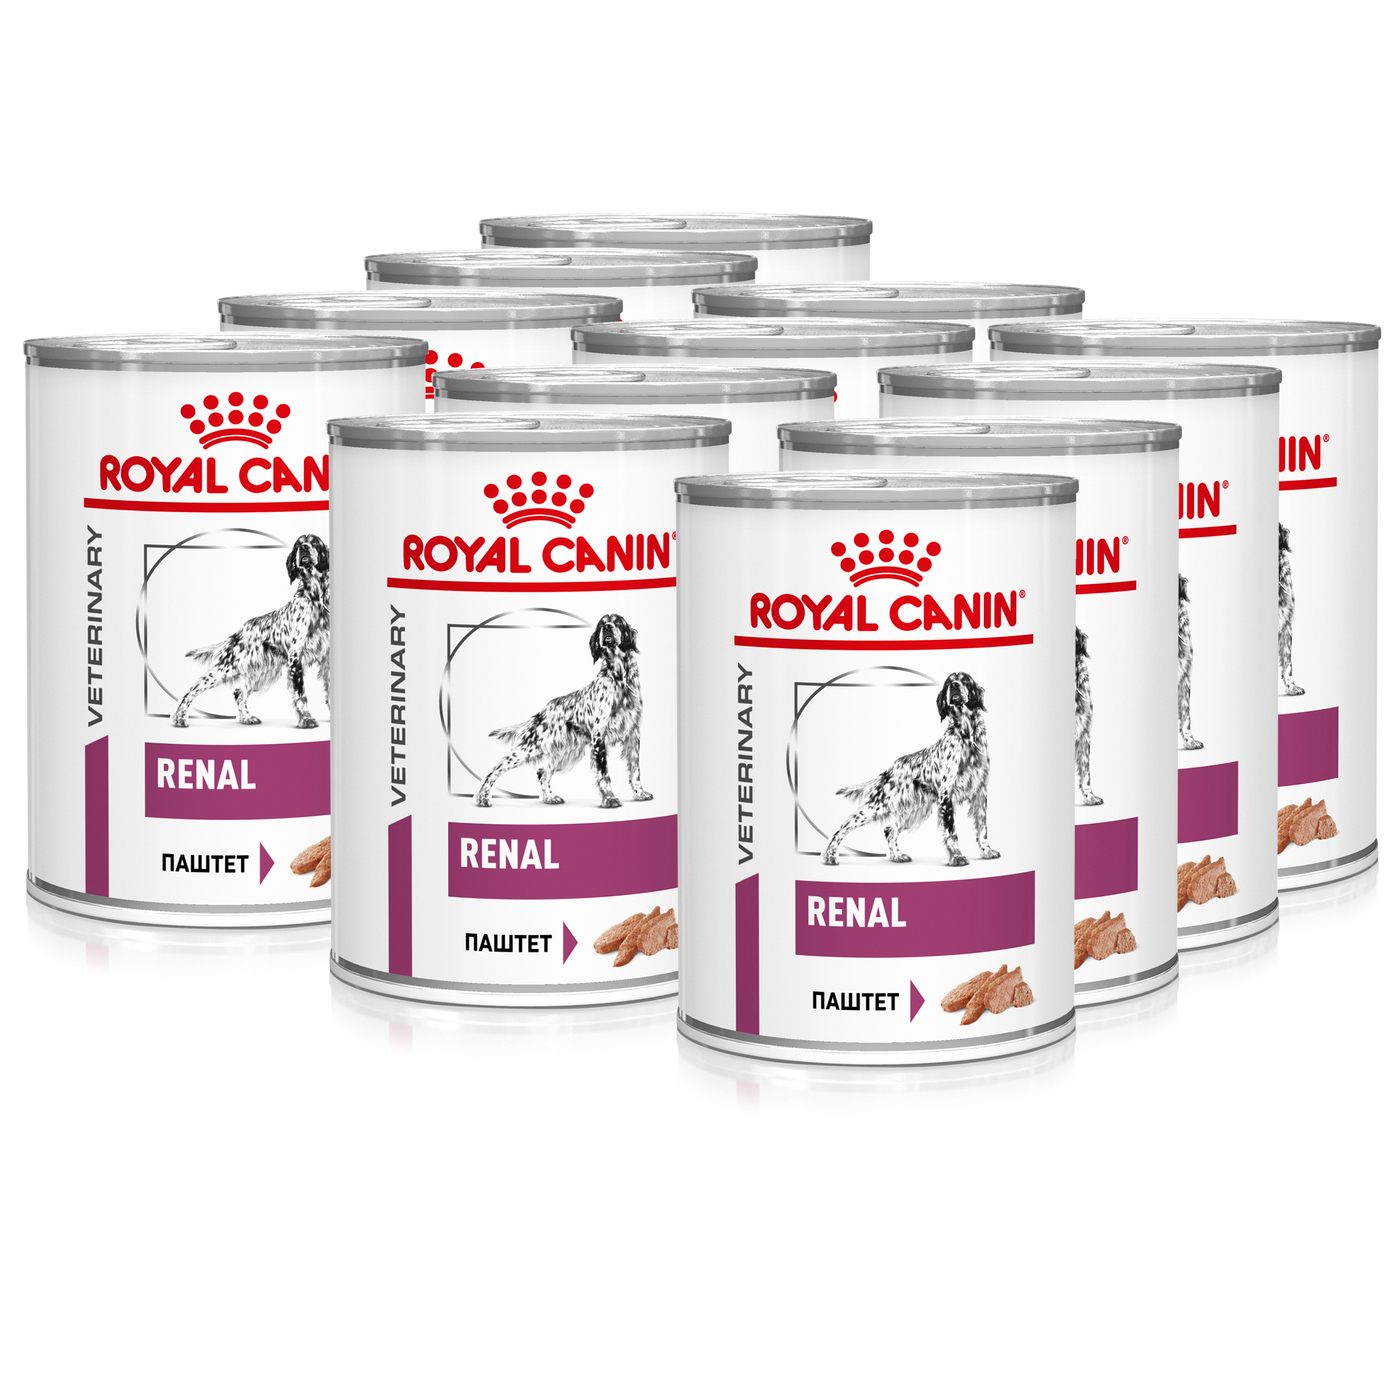 Royal canin adult dog maxi - рейтинг, обзор корма, сравнение и анализ royal canin adult dog maxi, состав и описание корма, плюсы и минусы royal canin adult dog maxi, отзывы о корме, характеристика и дозировка